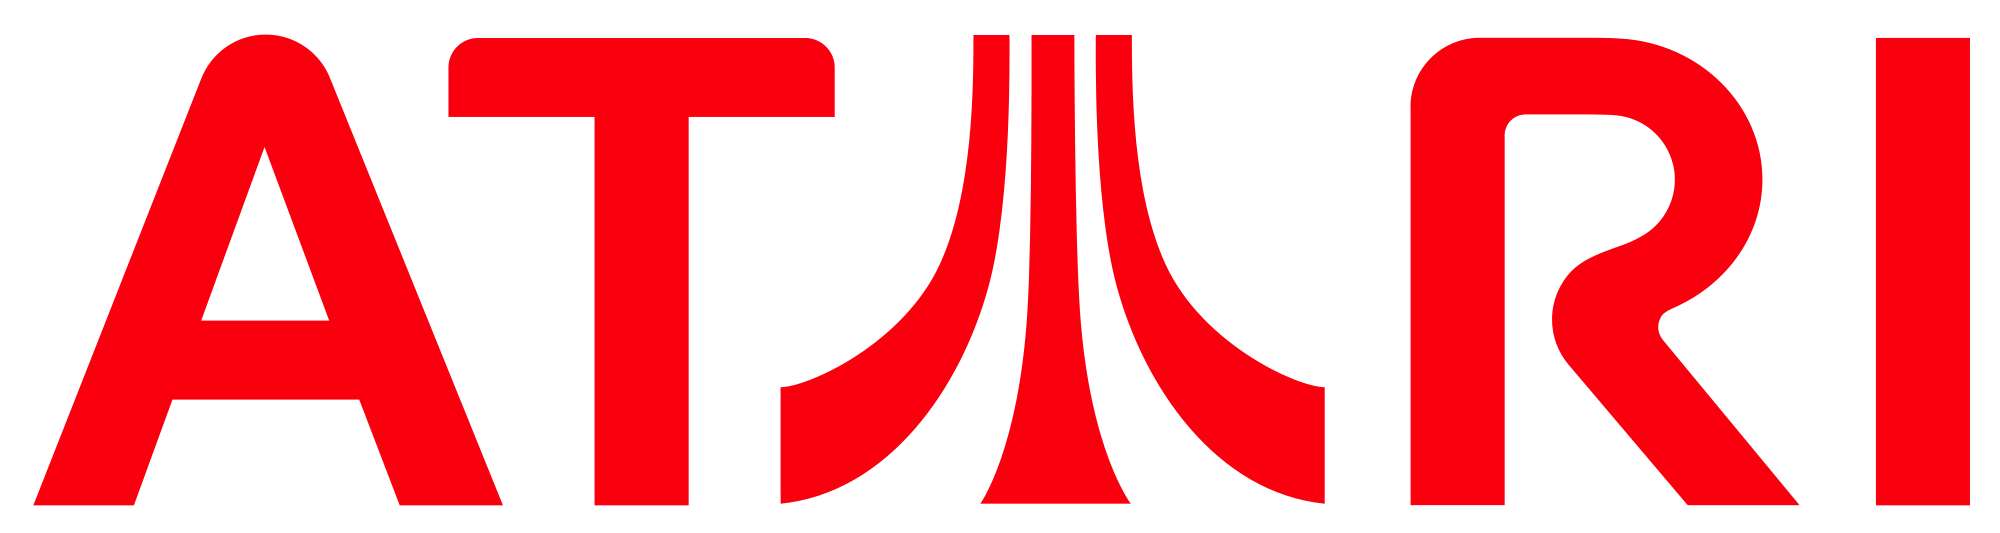 Atari Logo.png - Atari, Transparent background PNG HD thumbnail